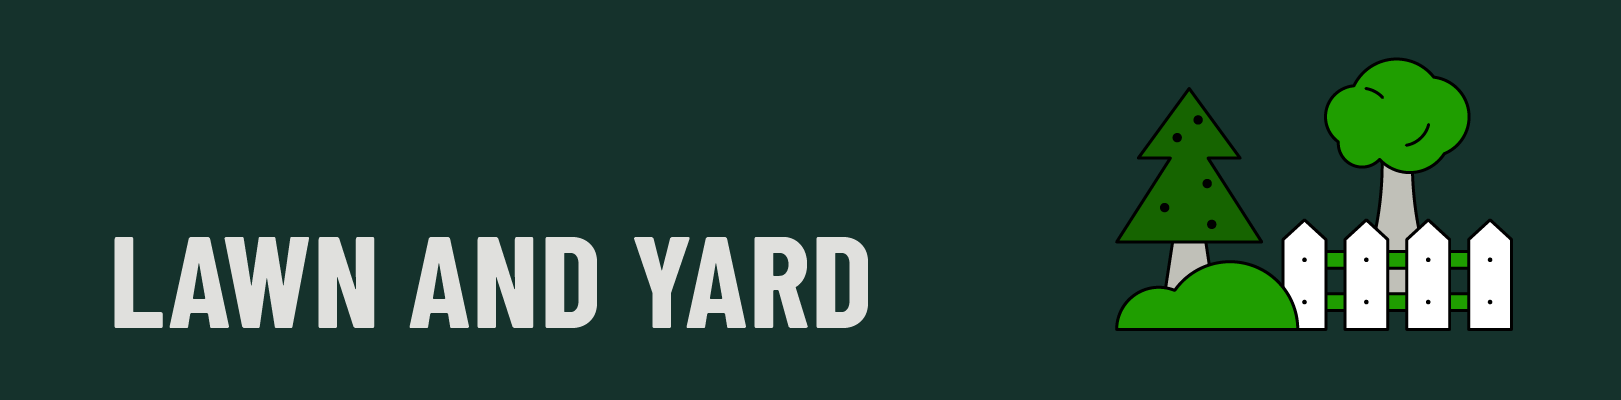 lawn and yard header